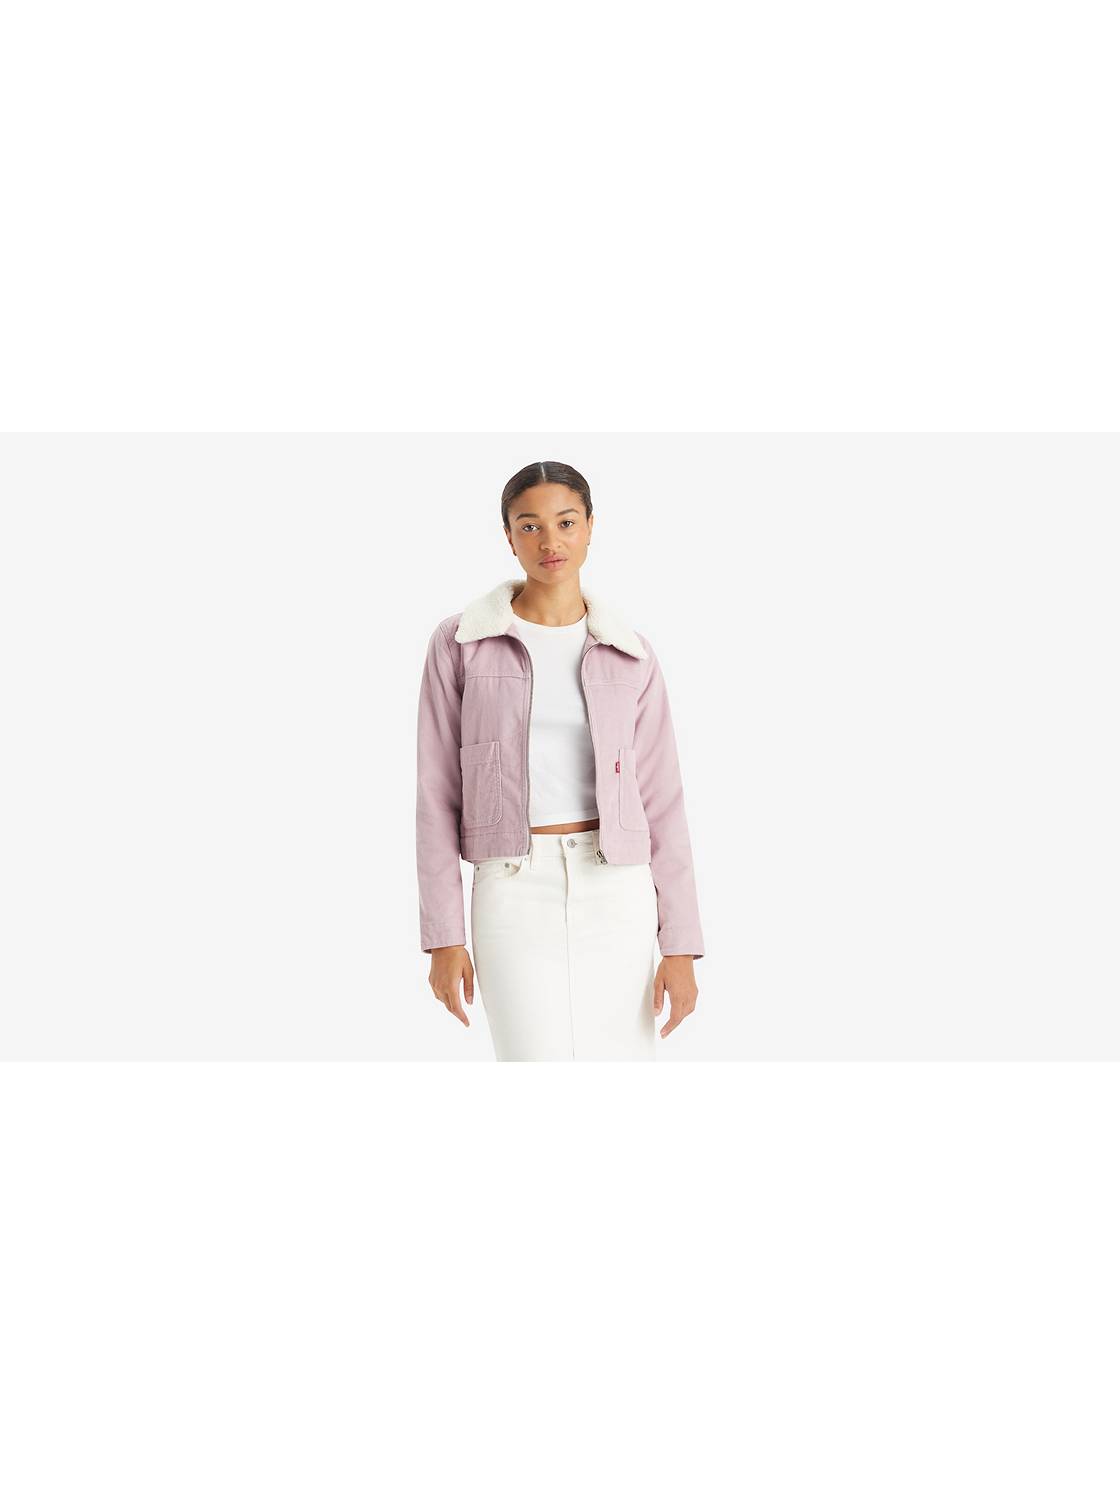 Shop Women's Jackets, Outerwear & Coats